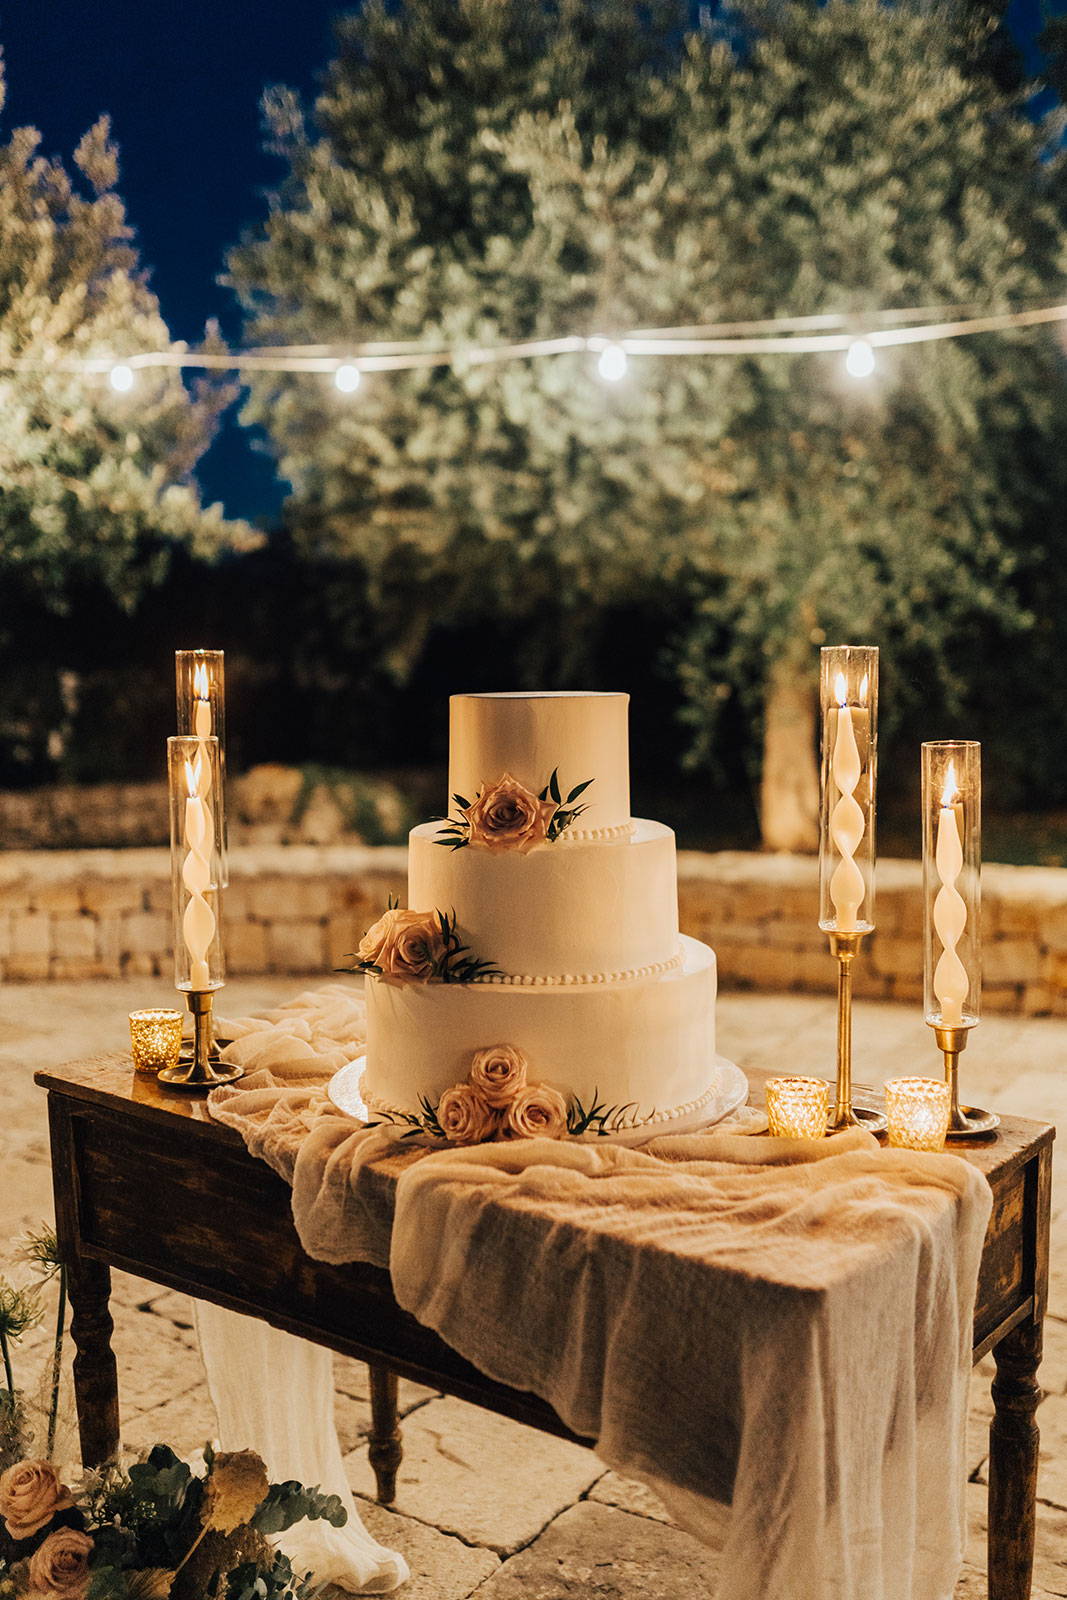 White wedding cake with golden tones